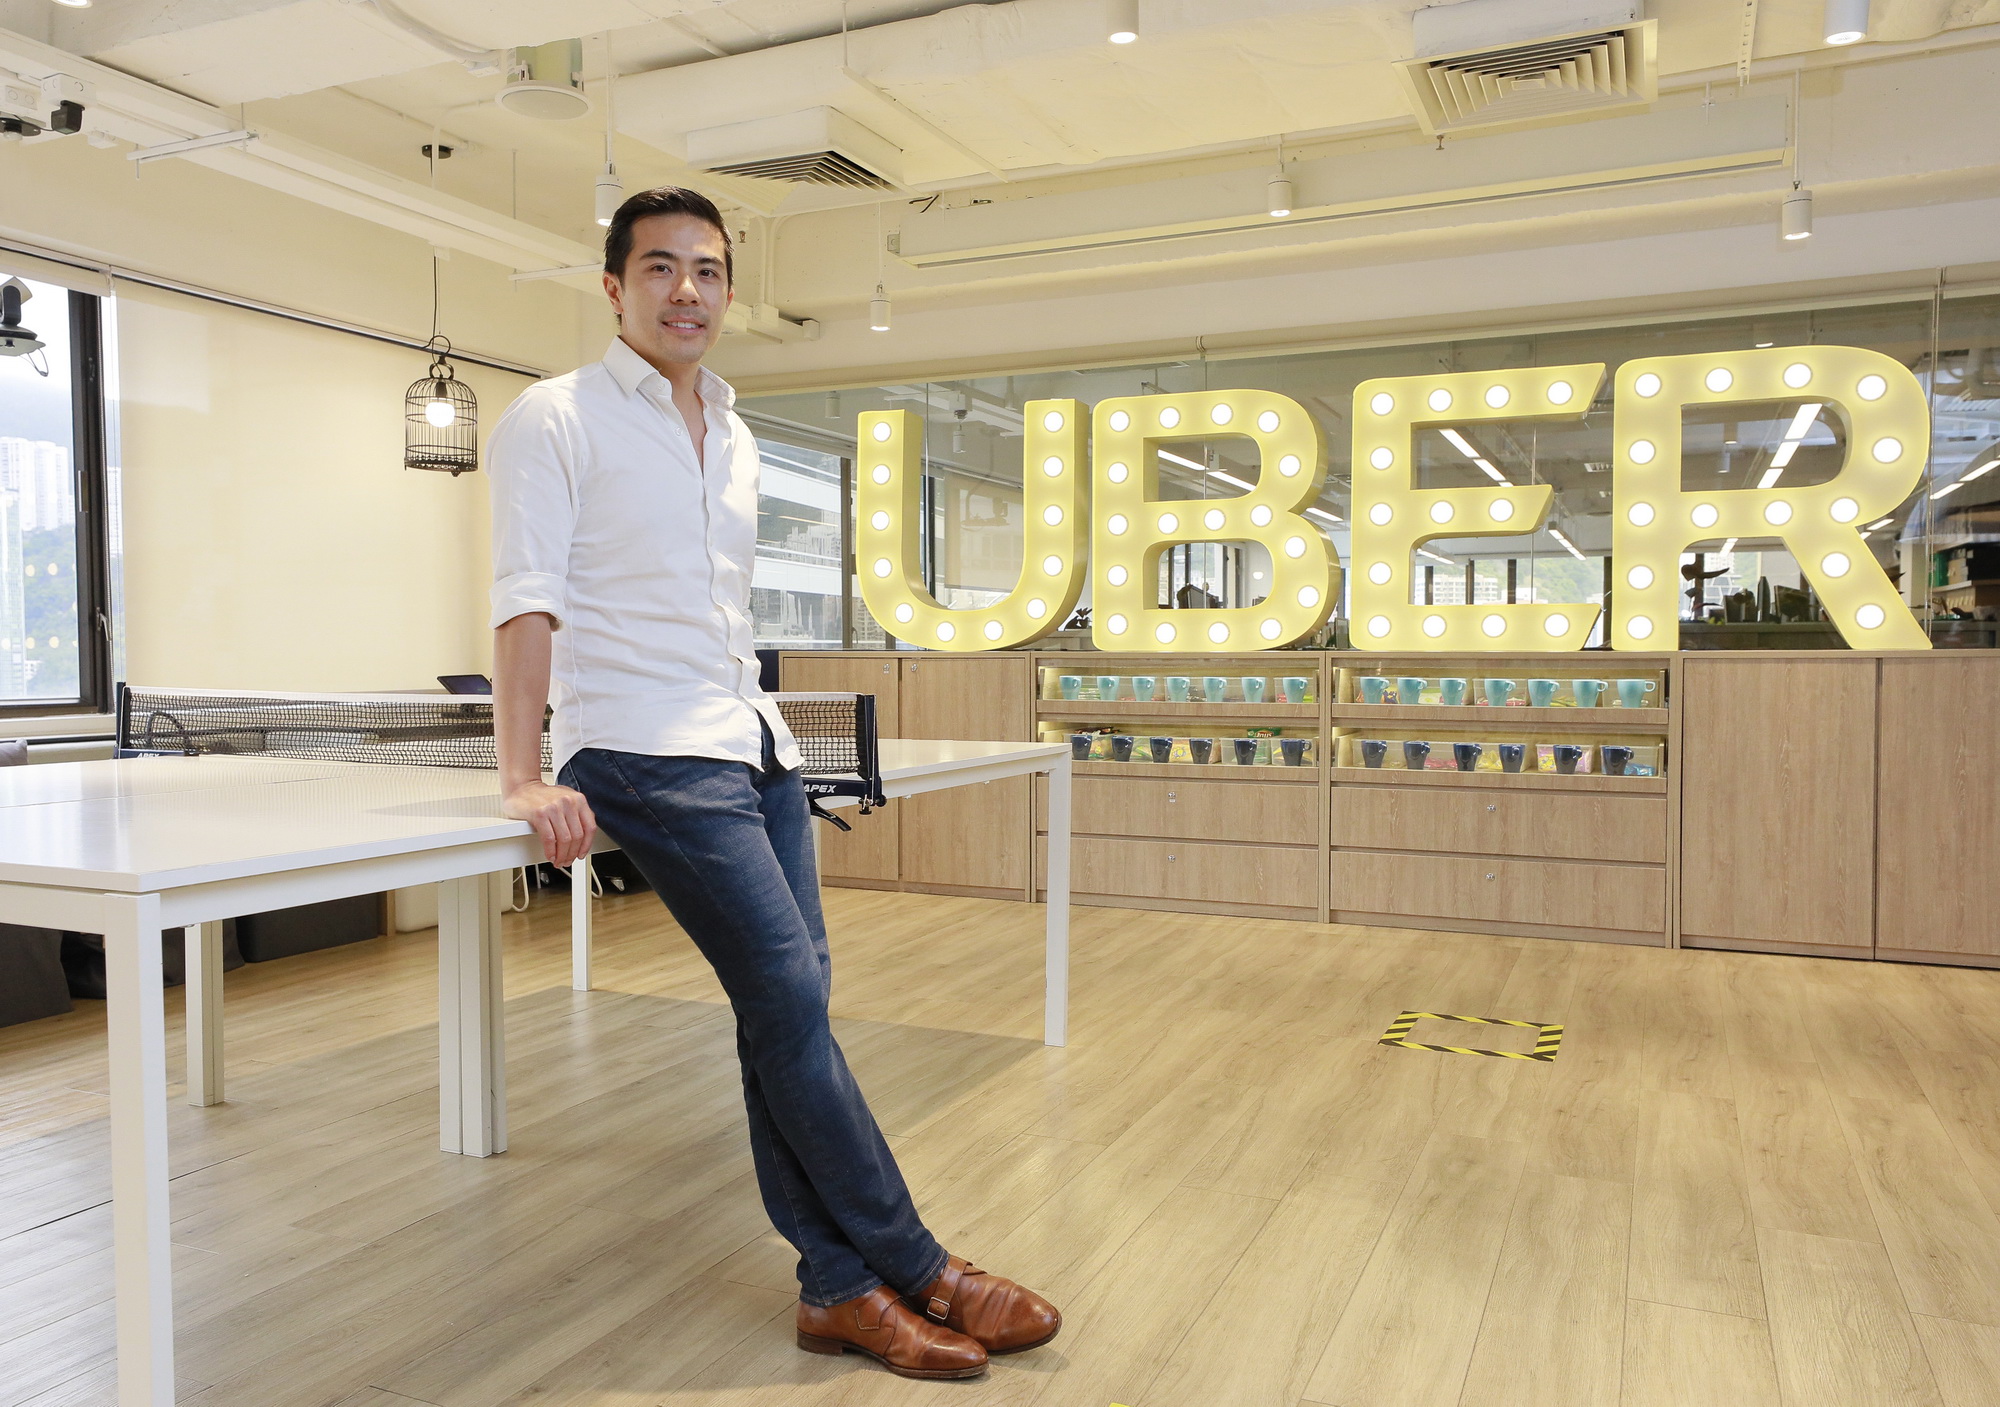 Uber香港區總經理鍾志霆表示，希望把更多創新科技及應用引進香港，但因缺乏法規肯定導致舉步難艱。（黃勁璋攝）